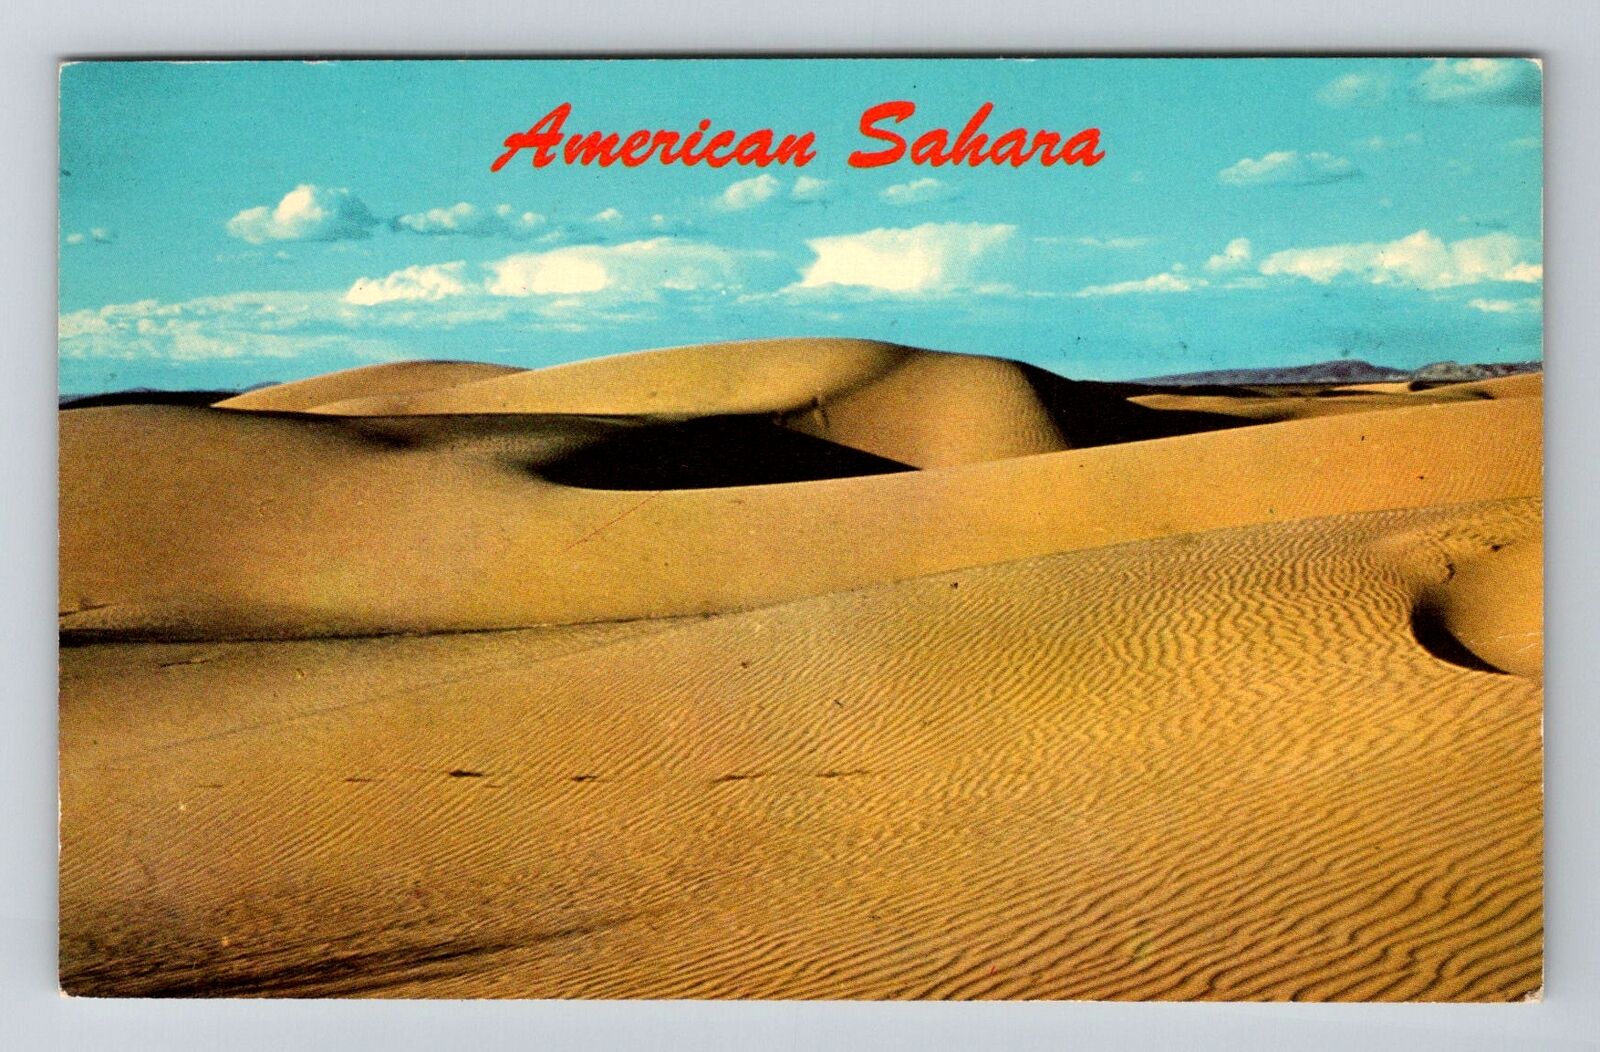 Yuma AZ-Arizona, American Sahara, Sand Dunes, Vintage Postcard